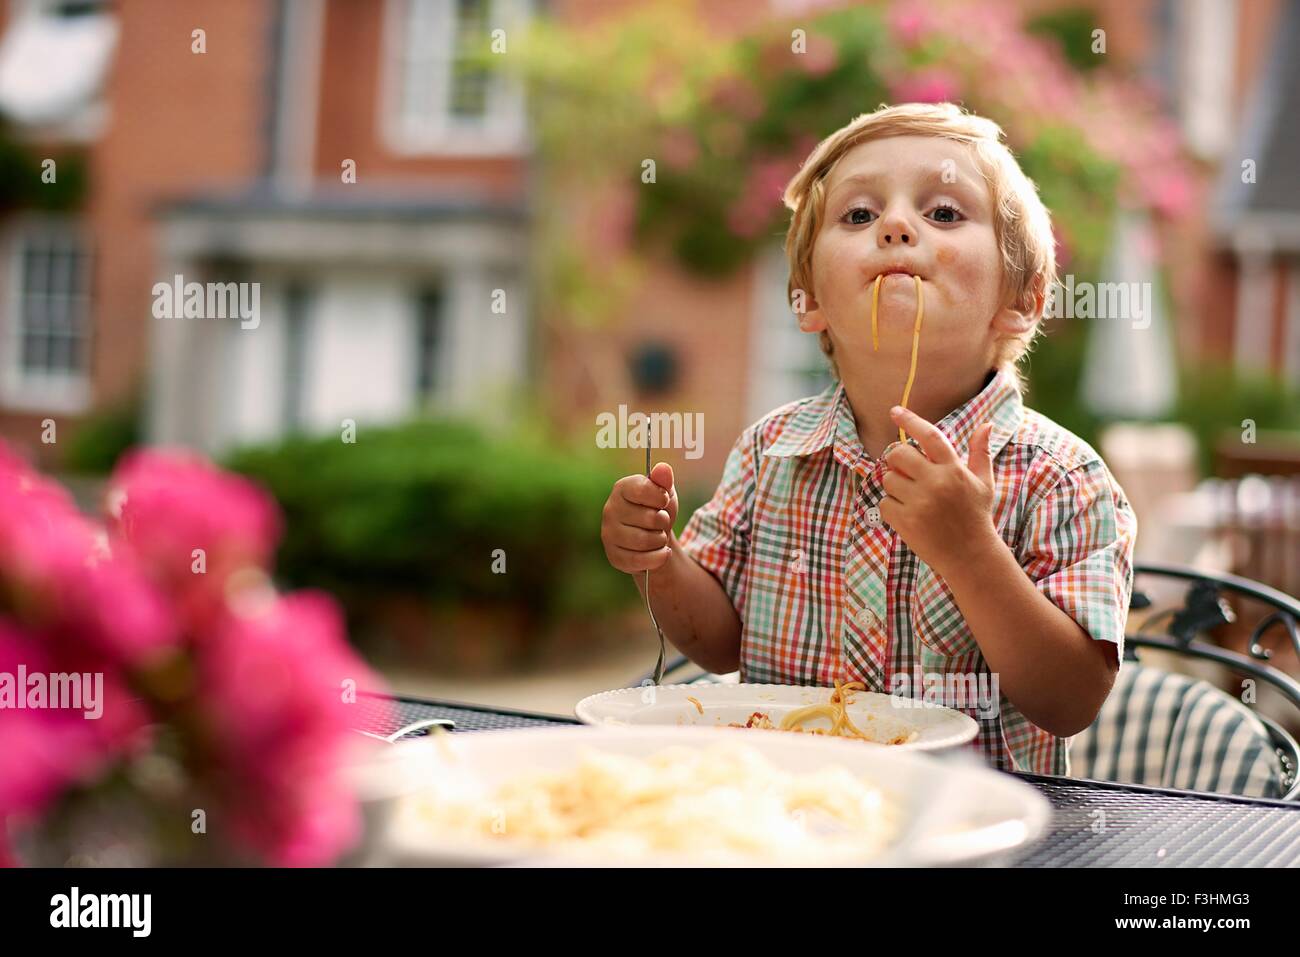 Muchacho sentado en la mesa de jardín chupando spaghetti mirando a la cámara Foto de stock